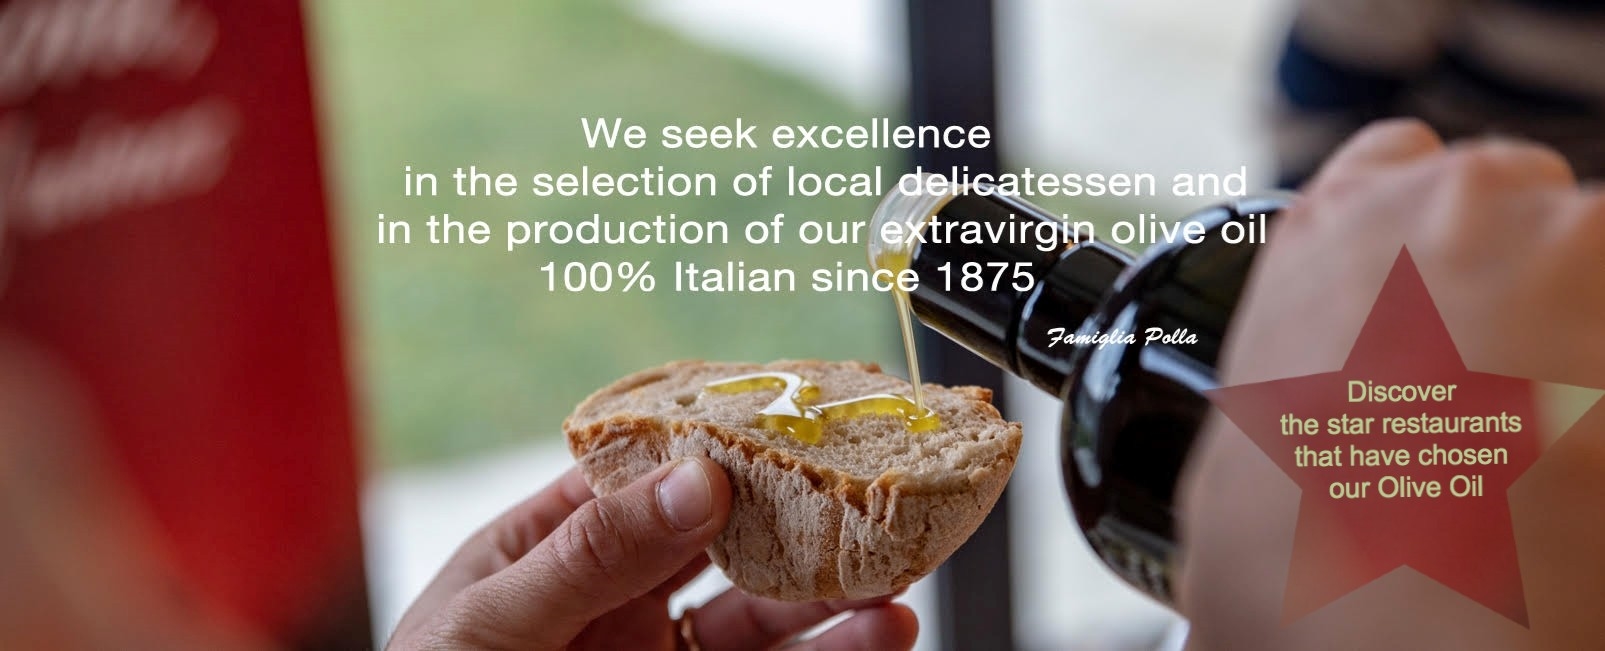 Extravirgin Olive Oil Taggiasco - 100% Italian - Polla since 1875